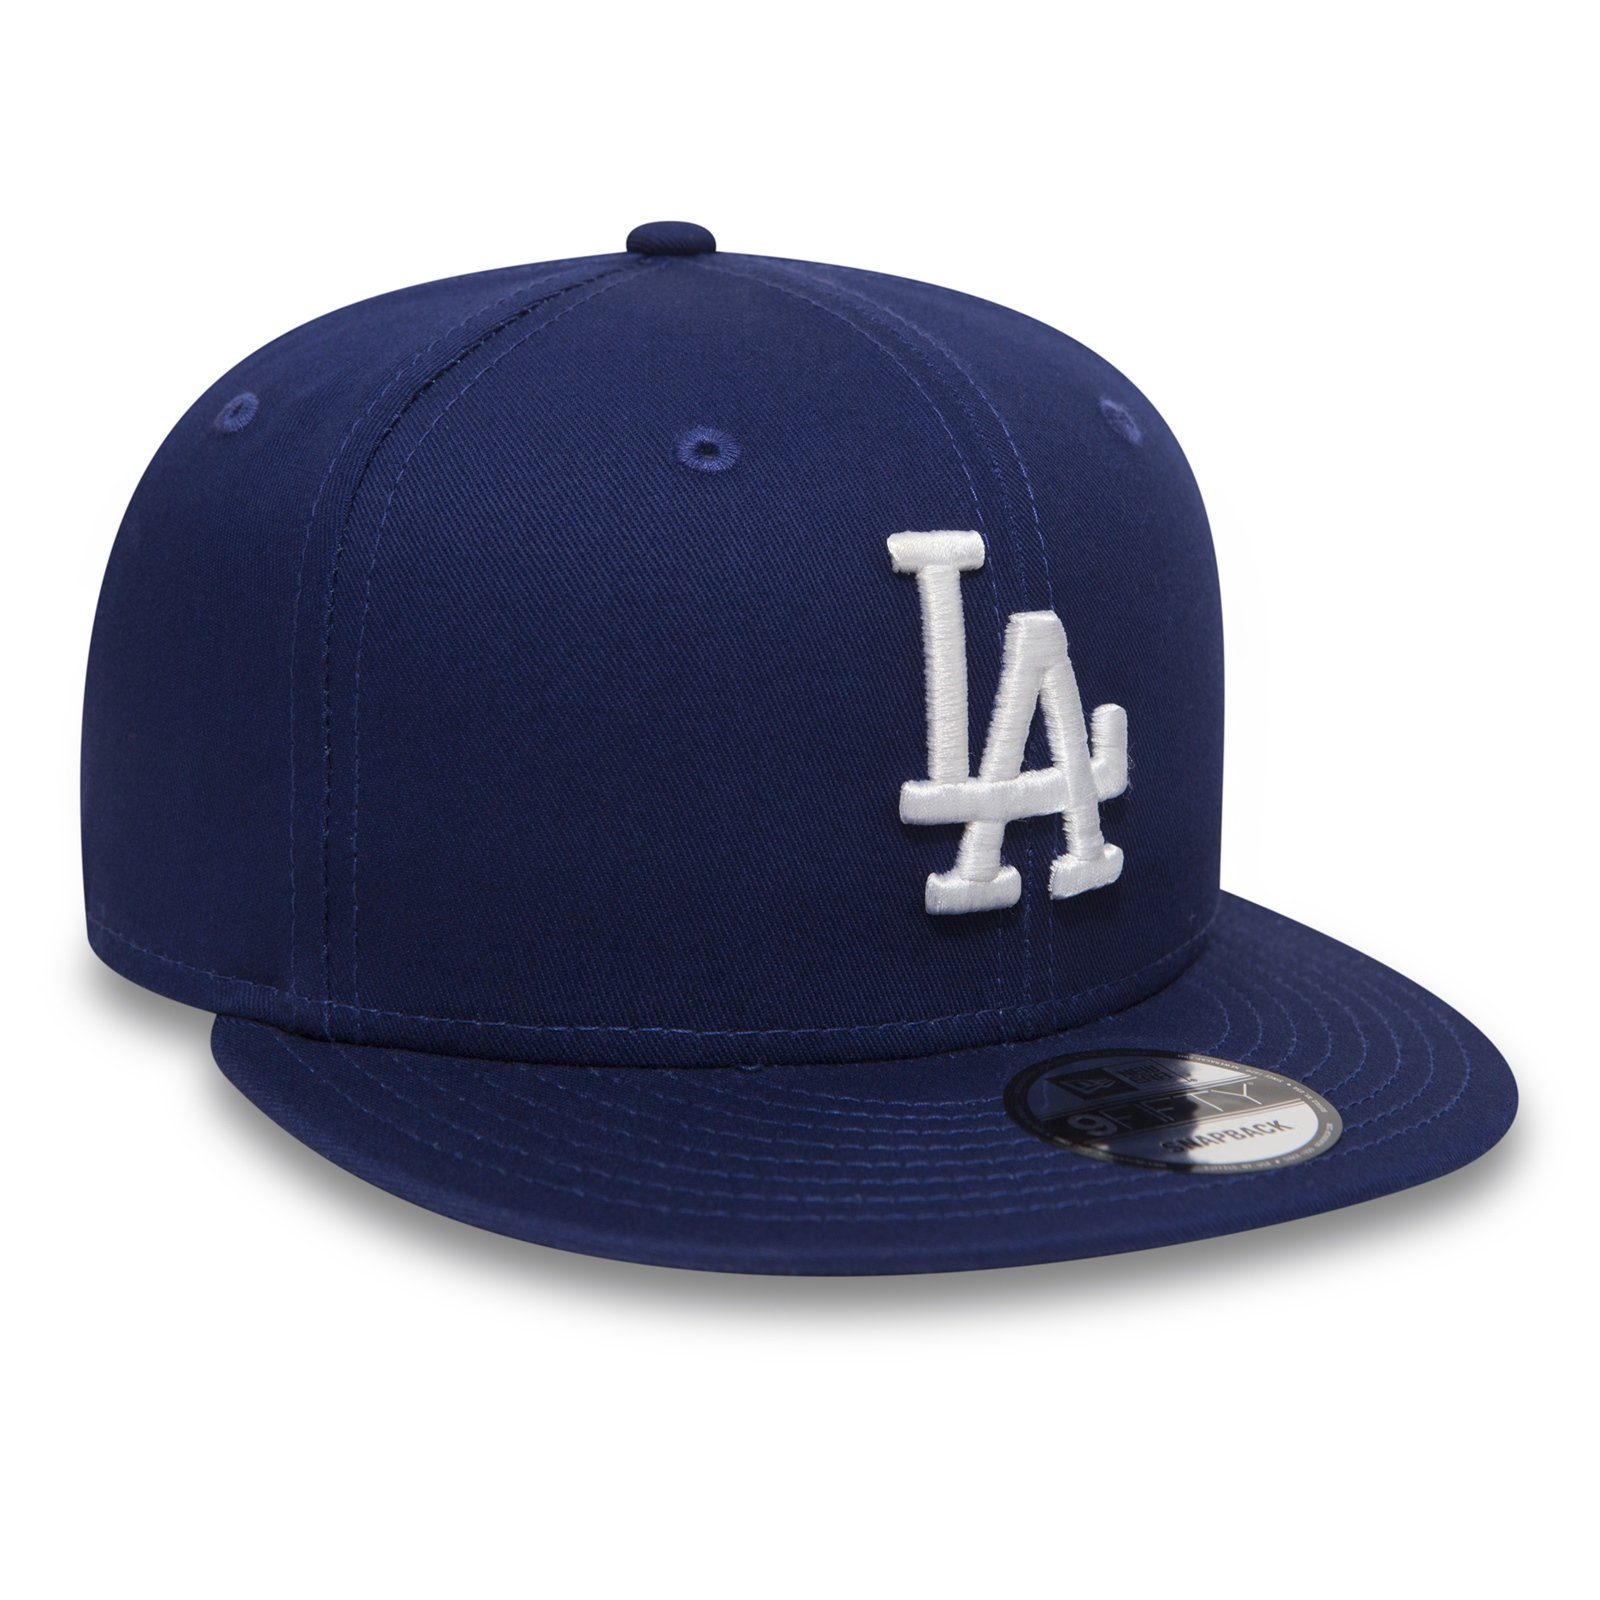 New Era Baseball Cap New Era 9Fifty Los Angeles Dodgers Snapback Cap blau weiss